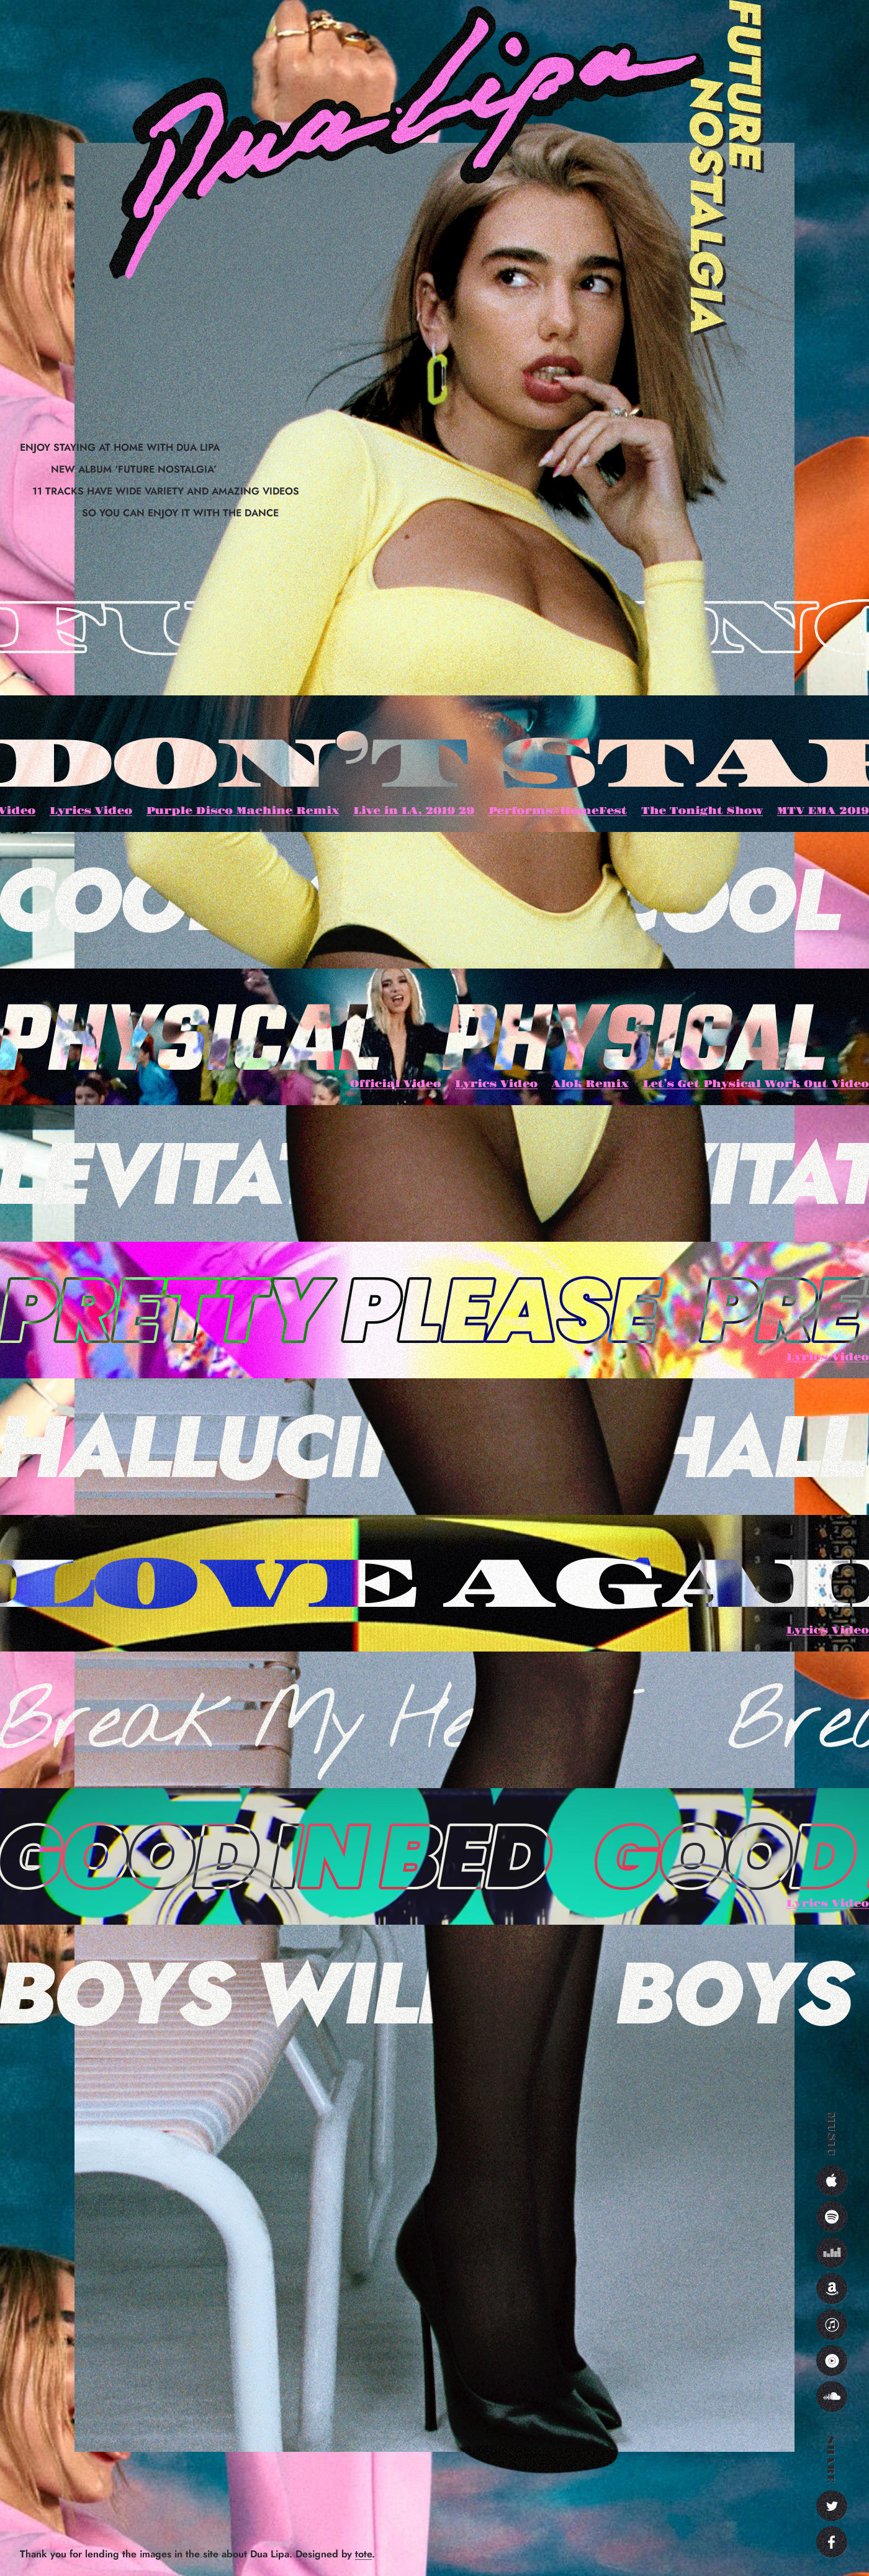 dualipa music playlist Webdesign 80s Future Nostalgia pink vivid Promotion interactive